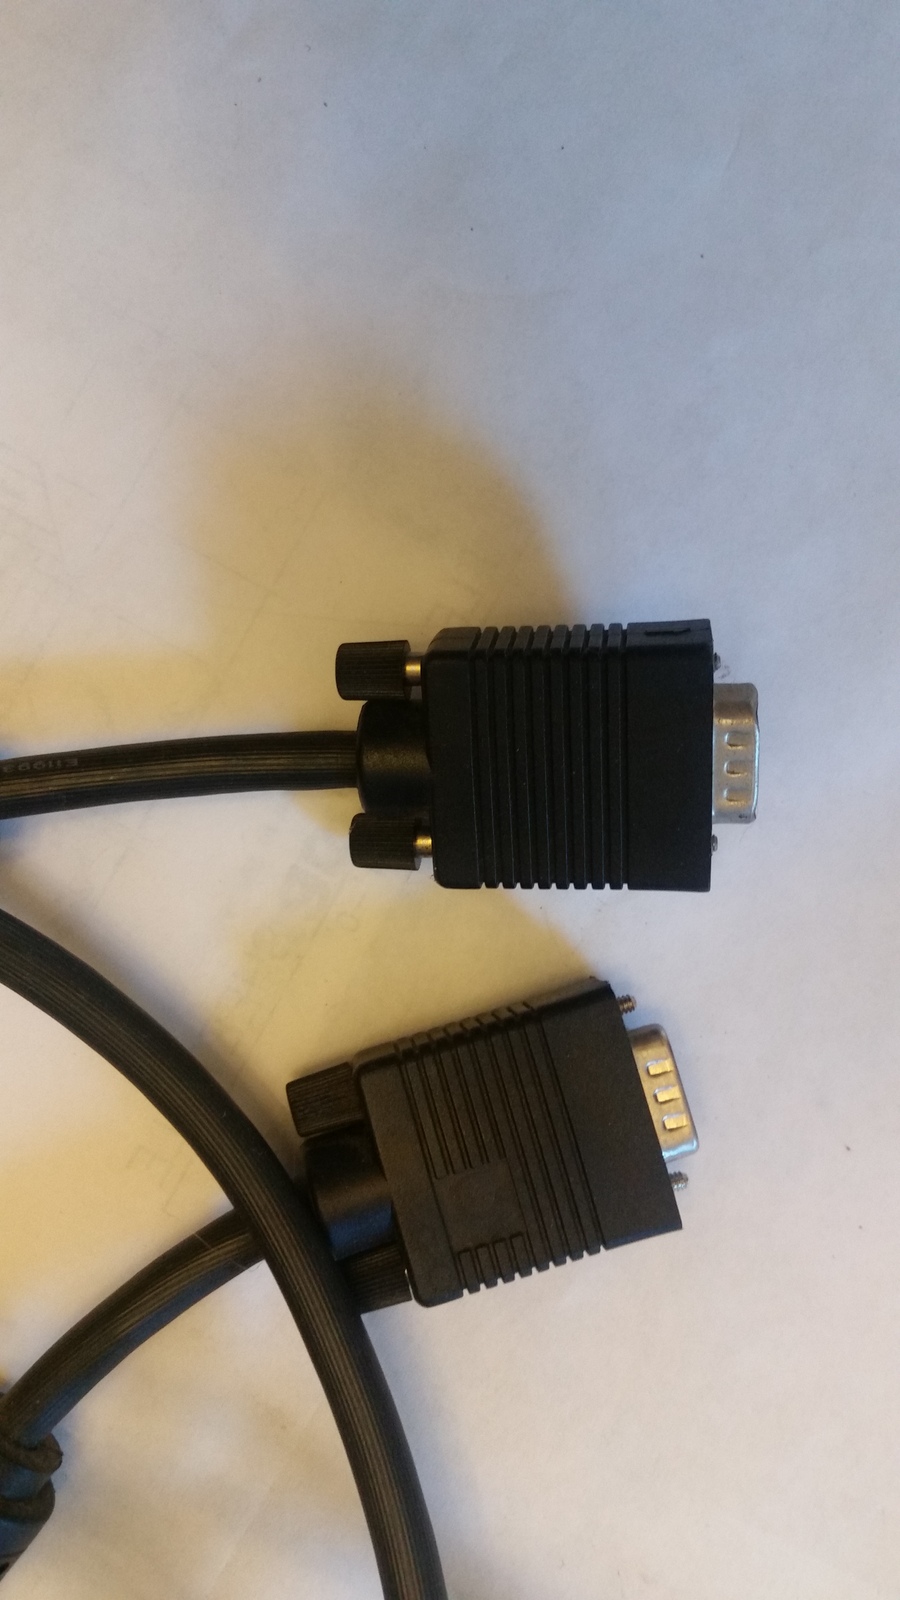 VGA Cable with DE-15 - $10.00